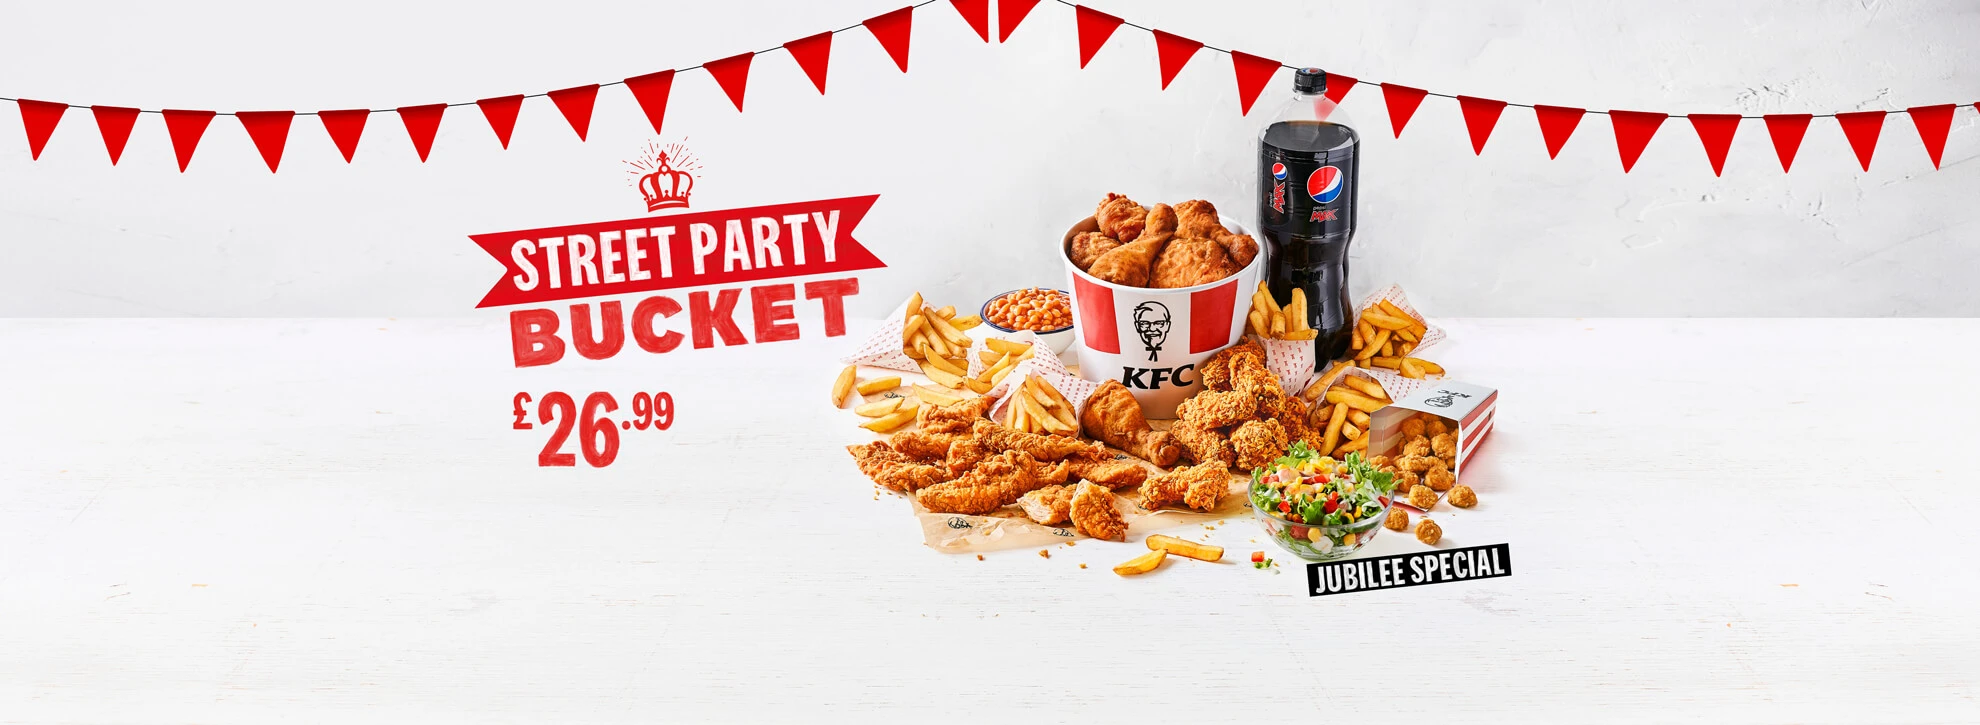 KFC party bucket